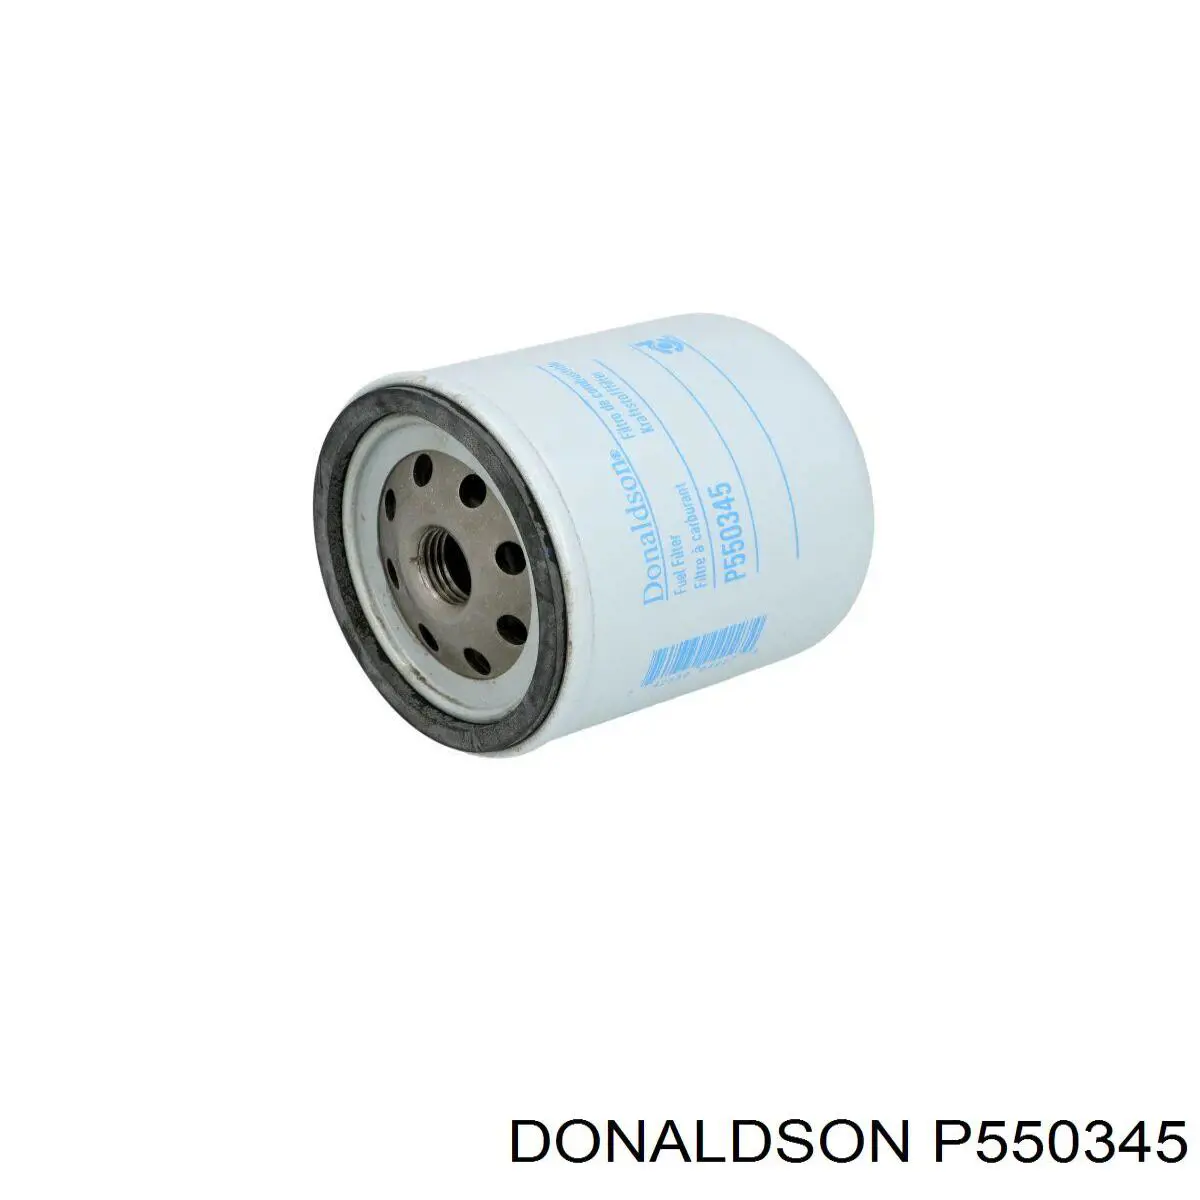 P550345 Donaldson filtro combustible